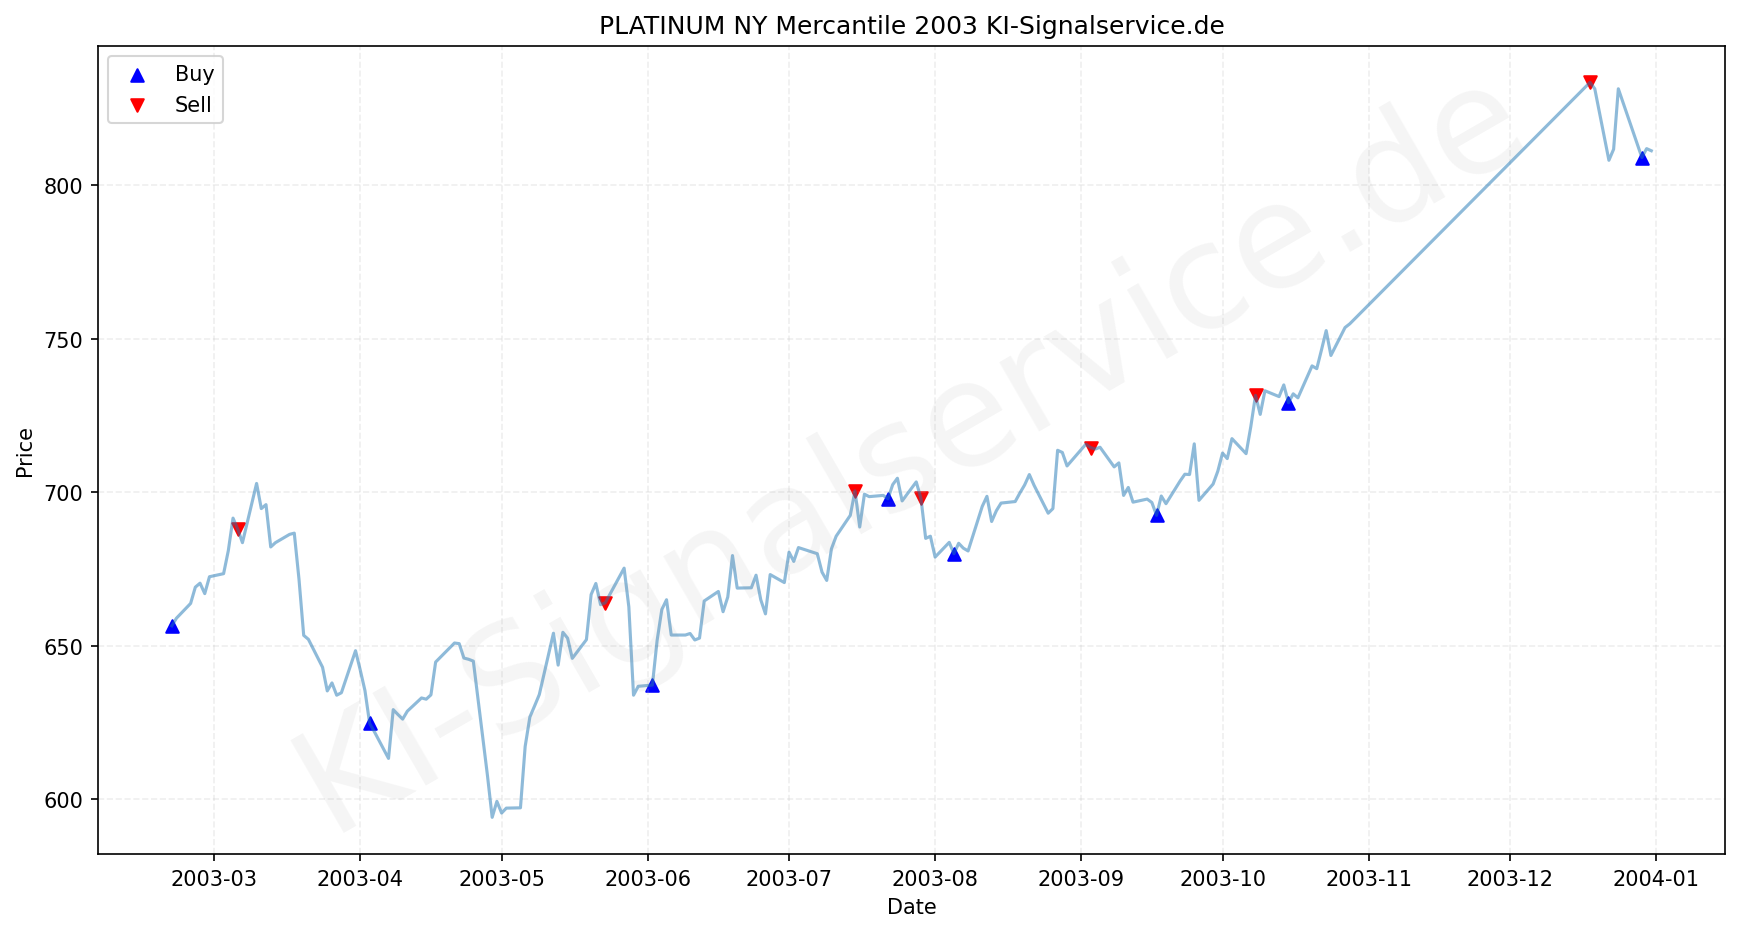 Platinum Chart - KI Tradingsignale 2003